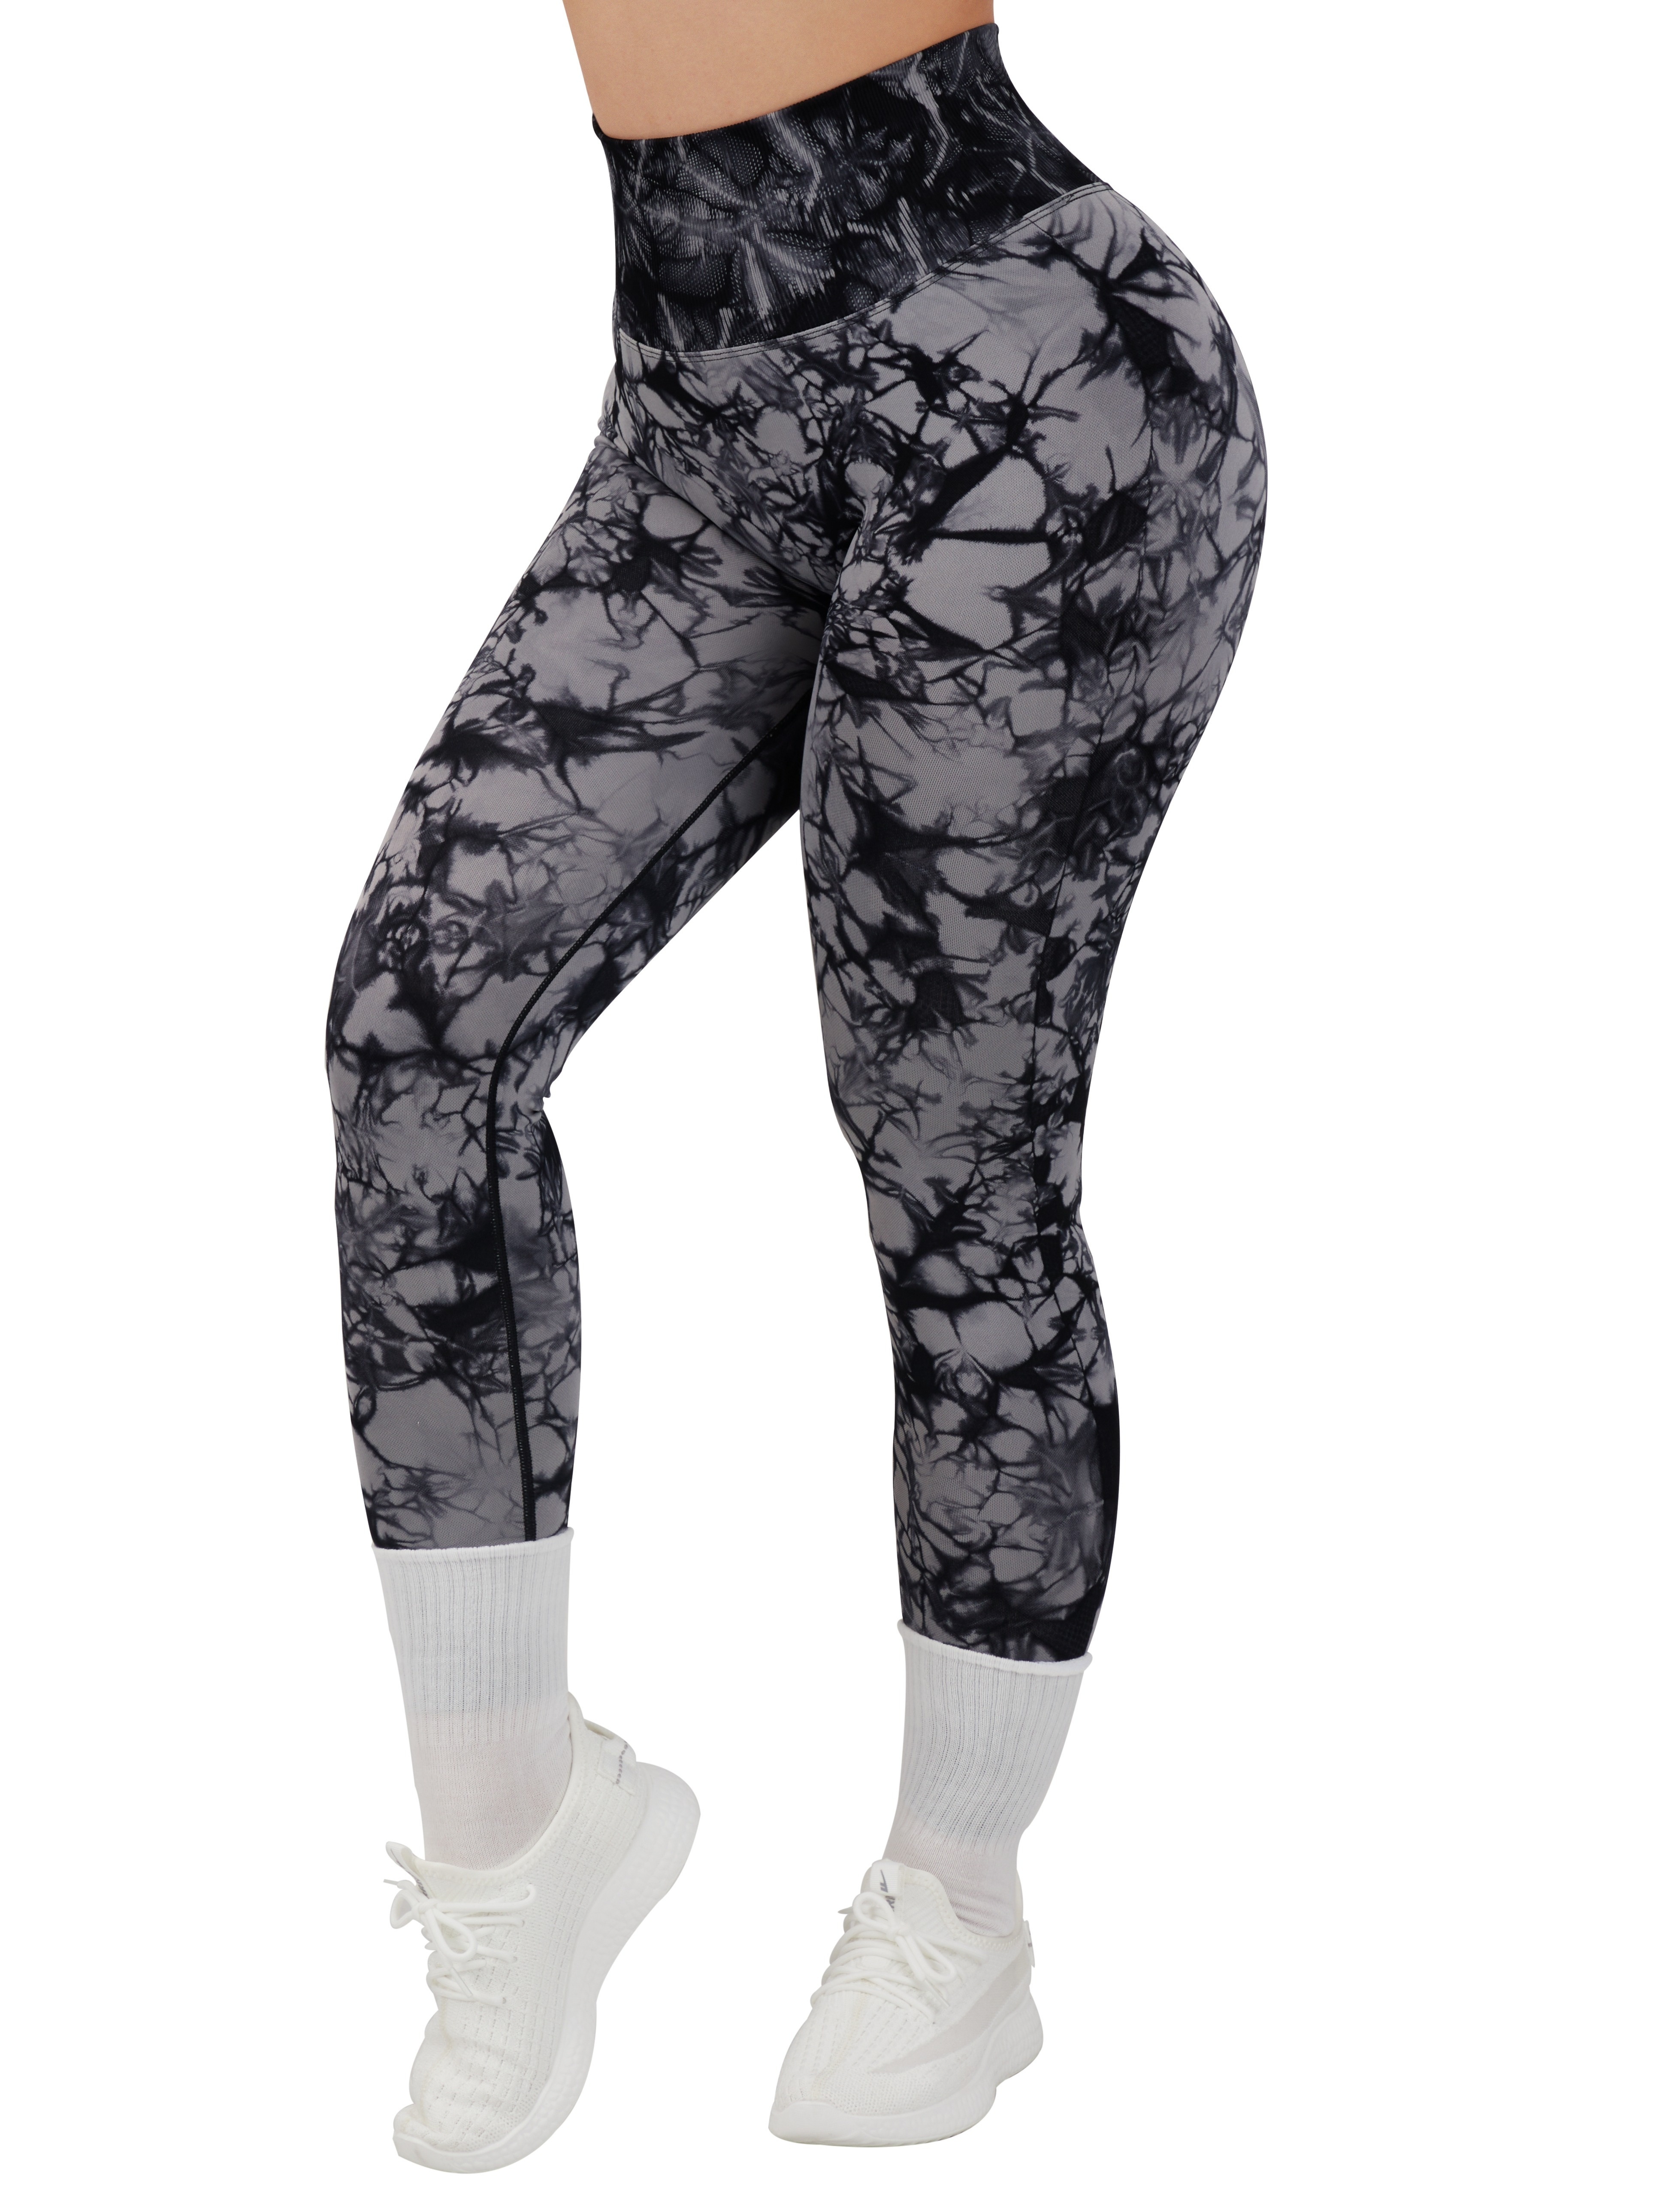 SHEIN Yoga Basic Women's Seamless High Stretch Camouflage Sportswear Set